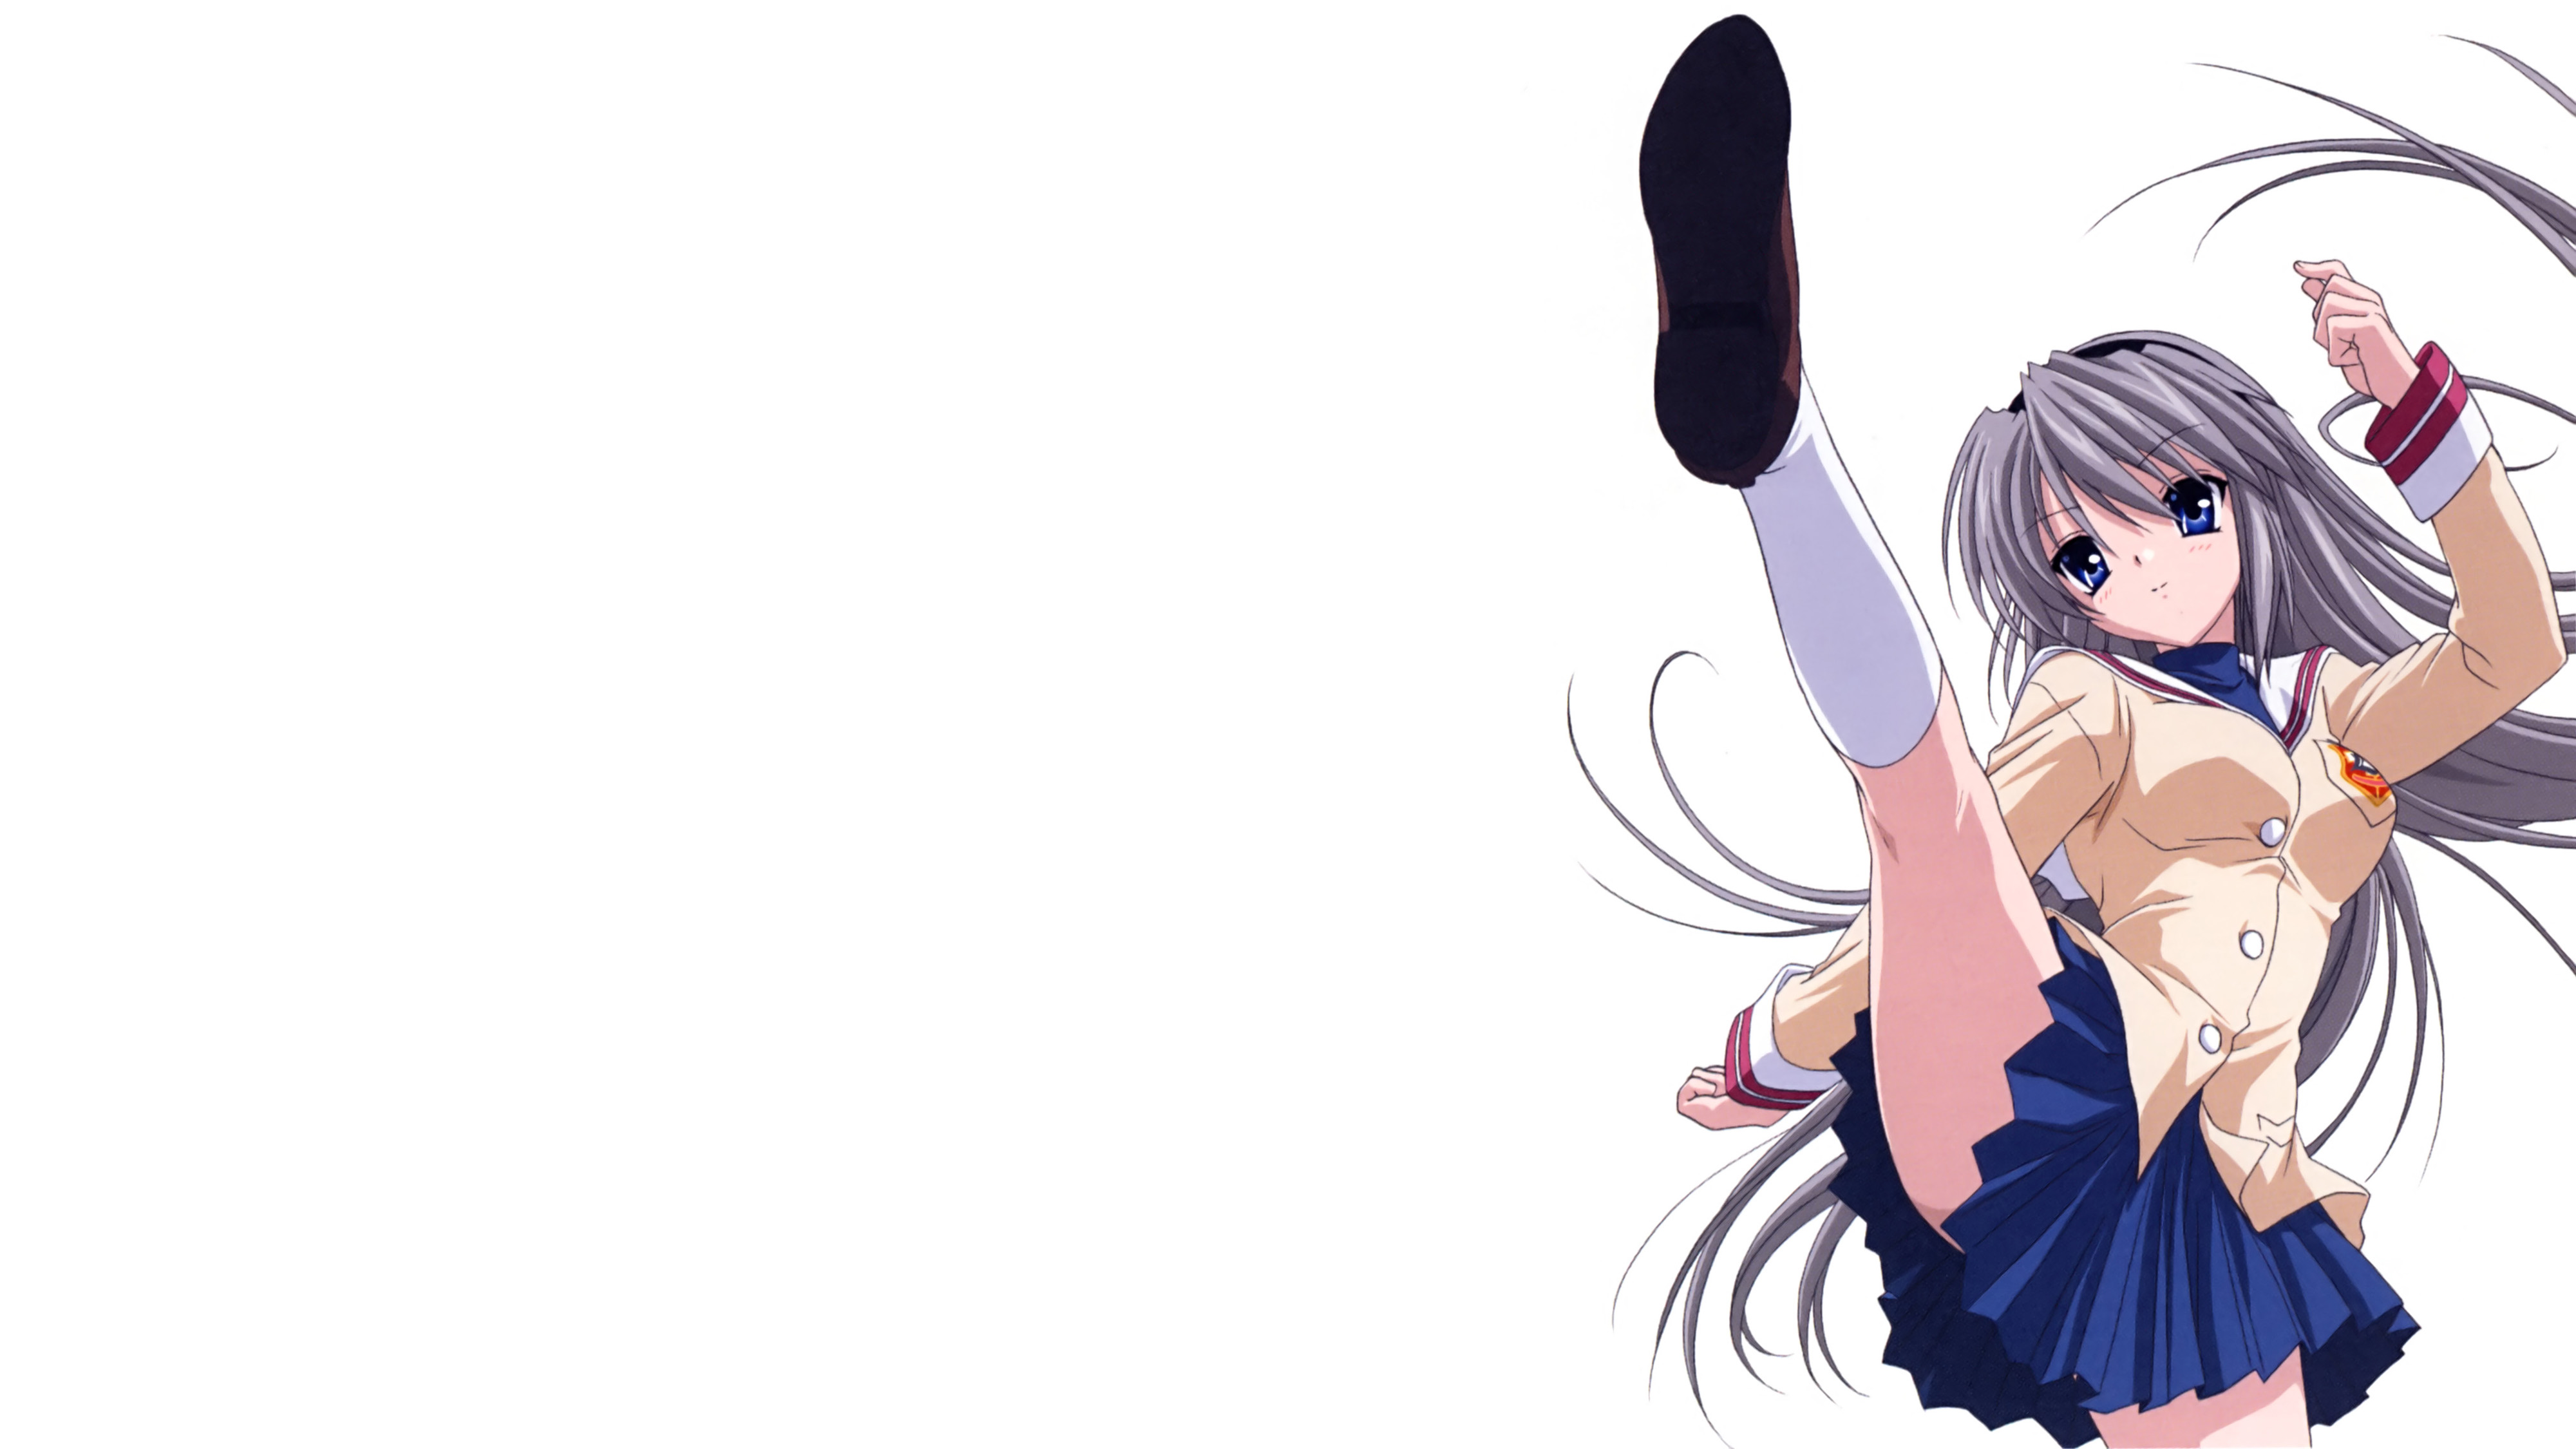 Download mobile wallpaper Anime, Clannad, Tomoyo Sakagami for free.